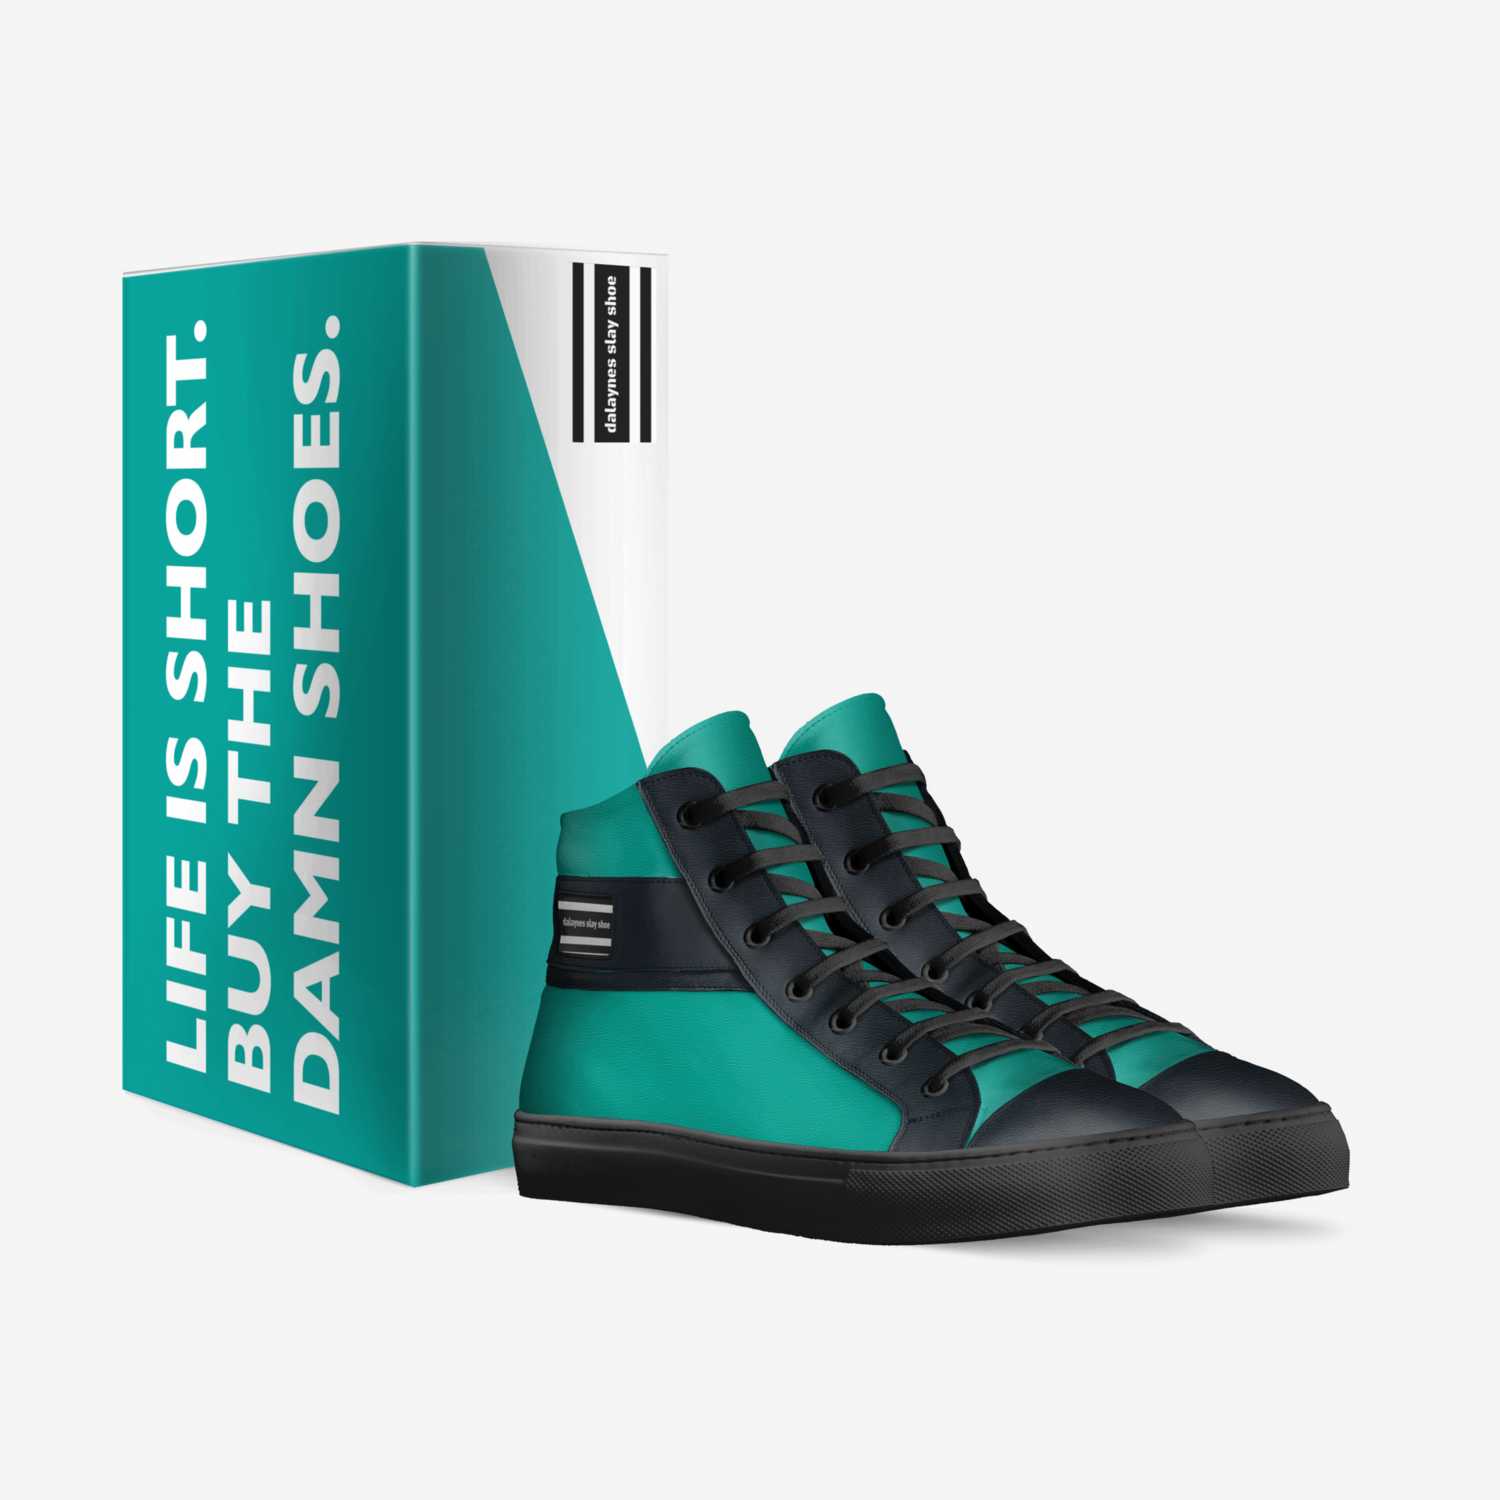 dalaynes slay shoe custom made in Italy shoes by Dalaynes Fernandez | Box view